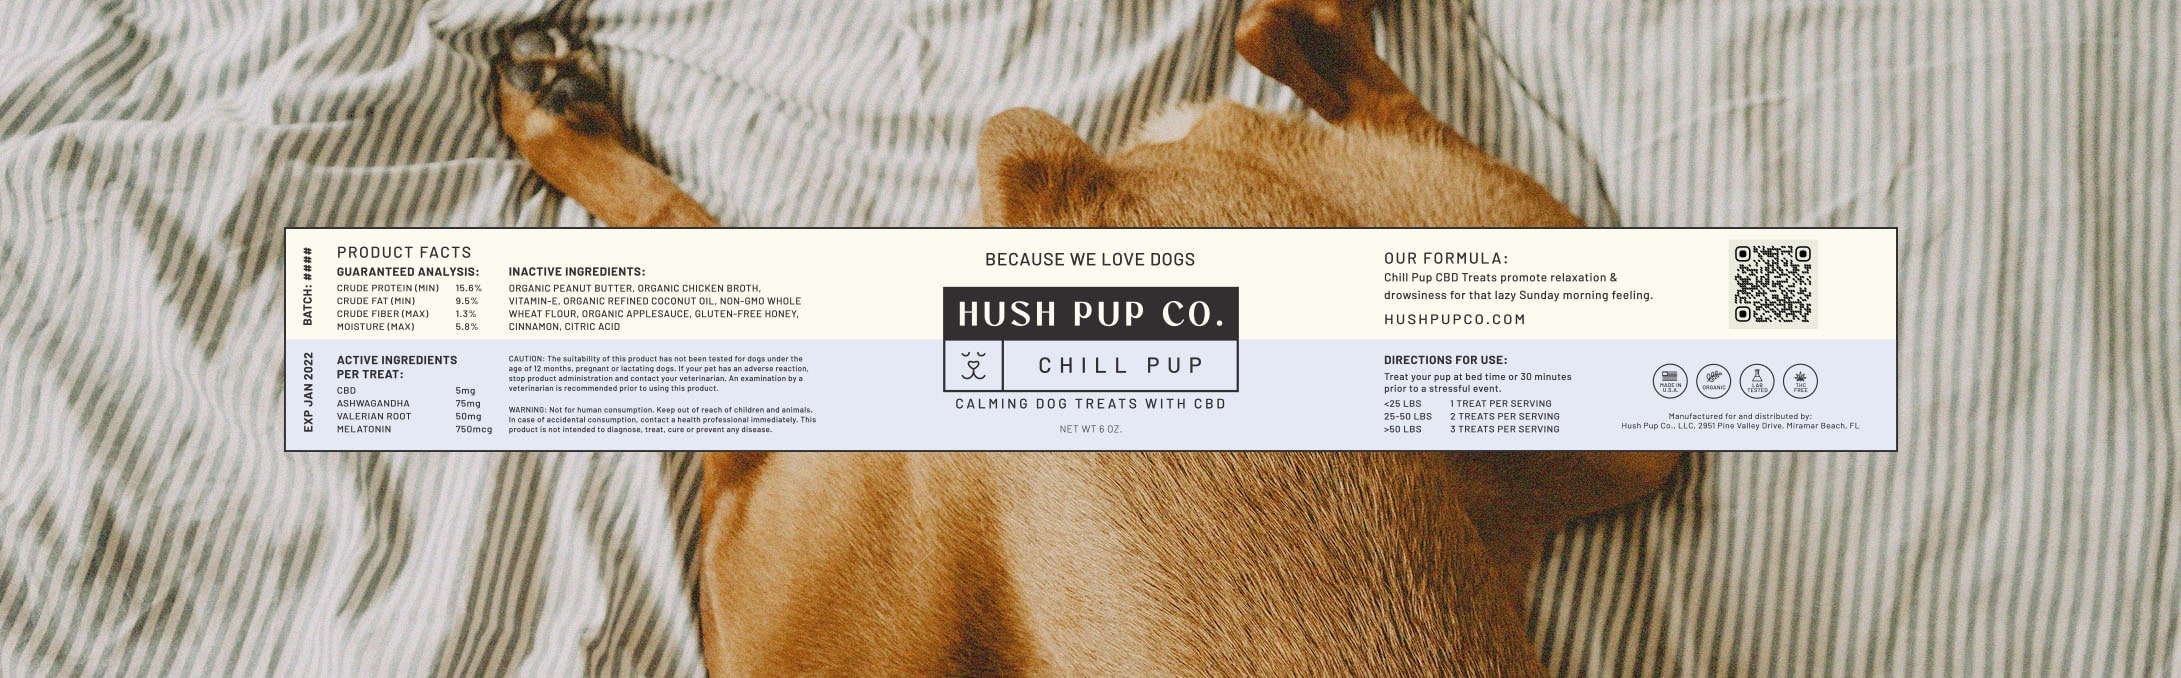 Hush Pup Co.